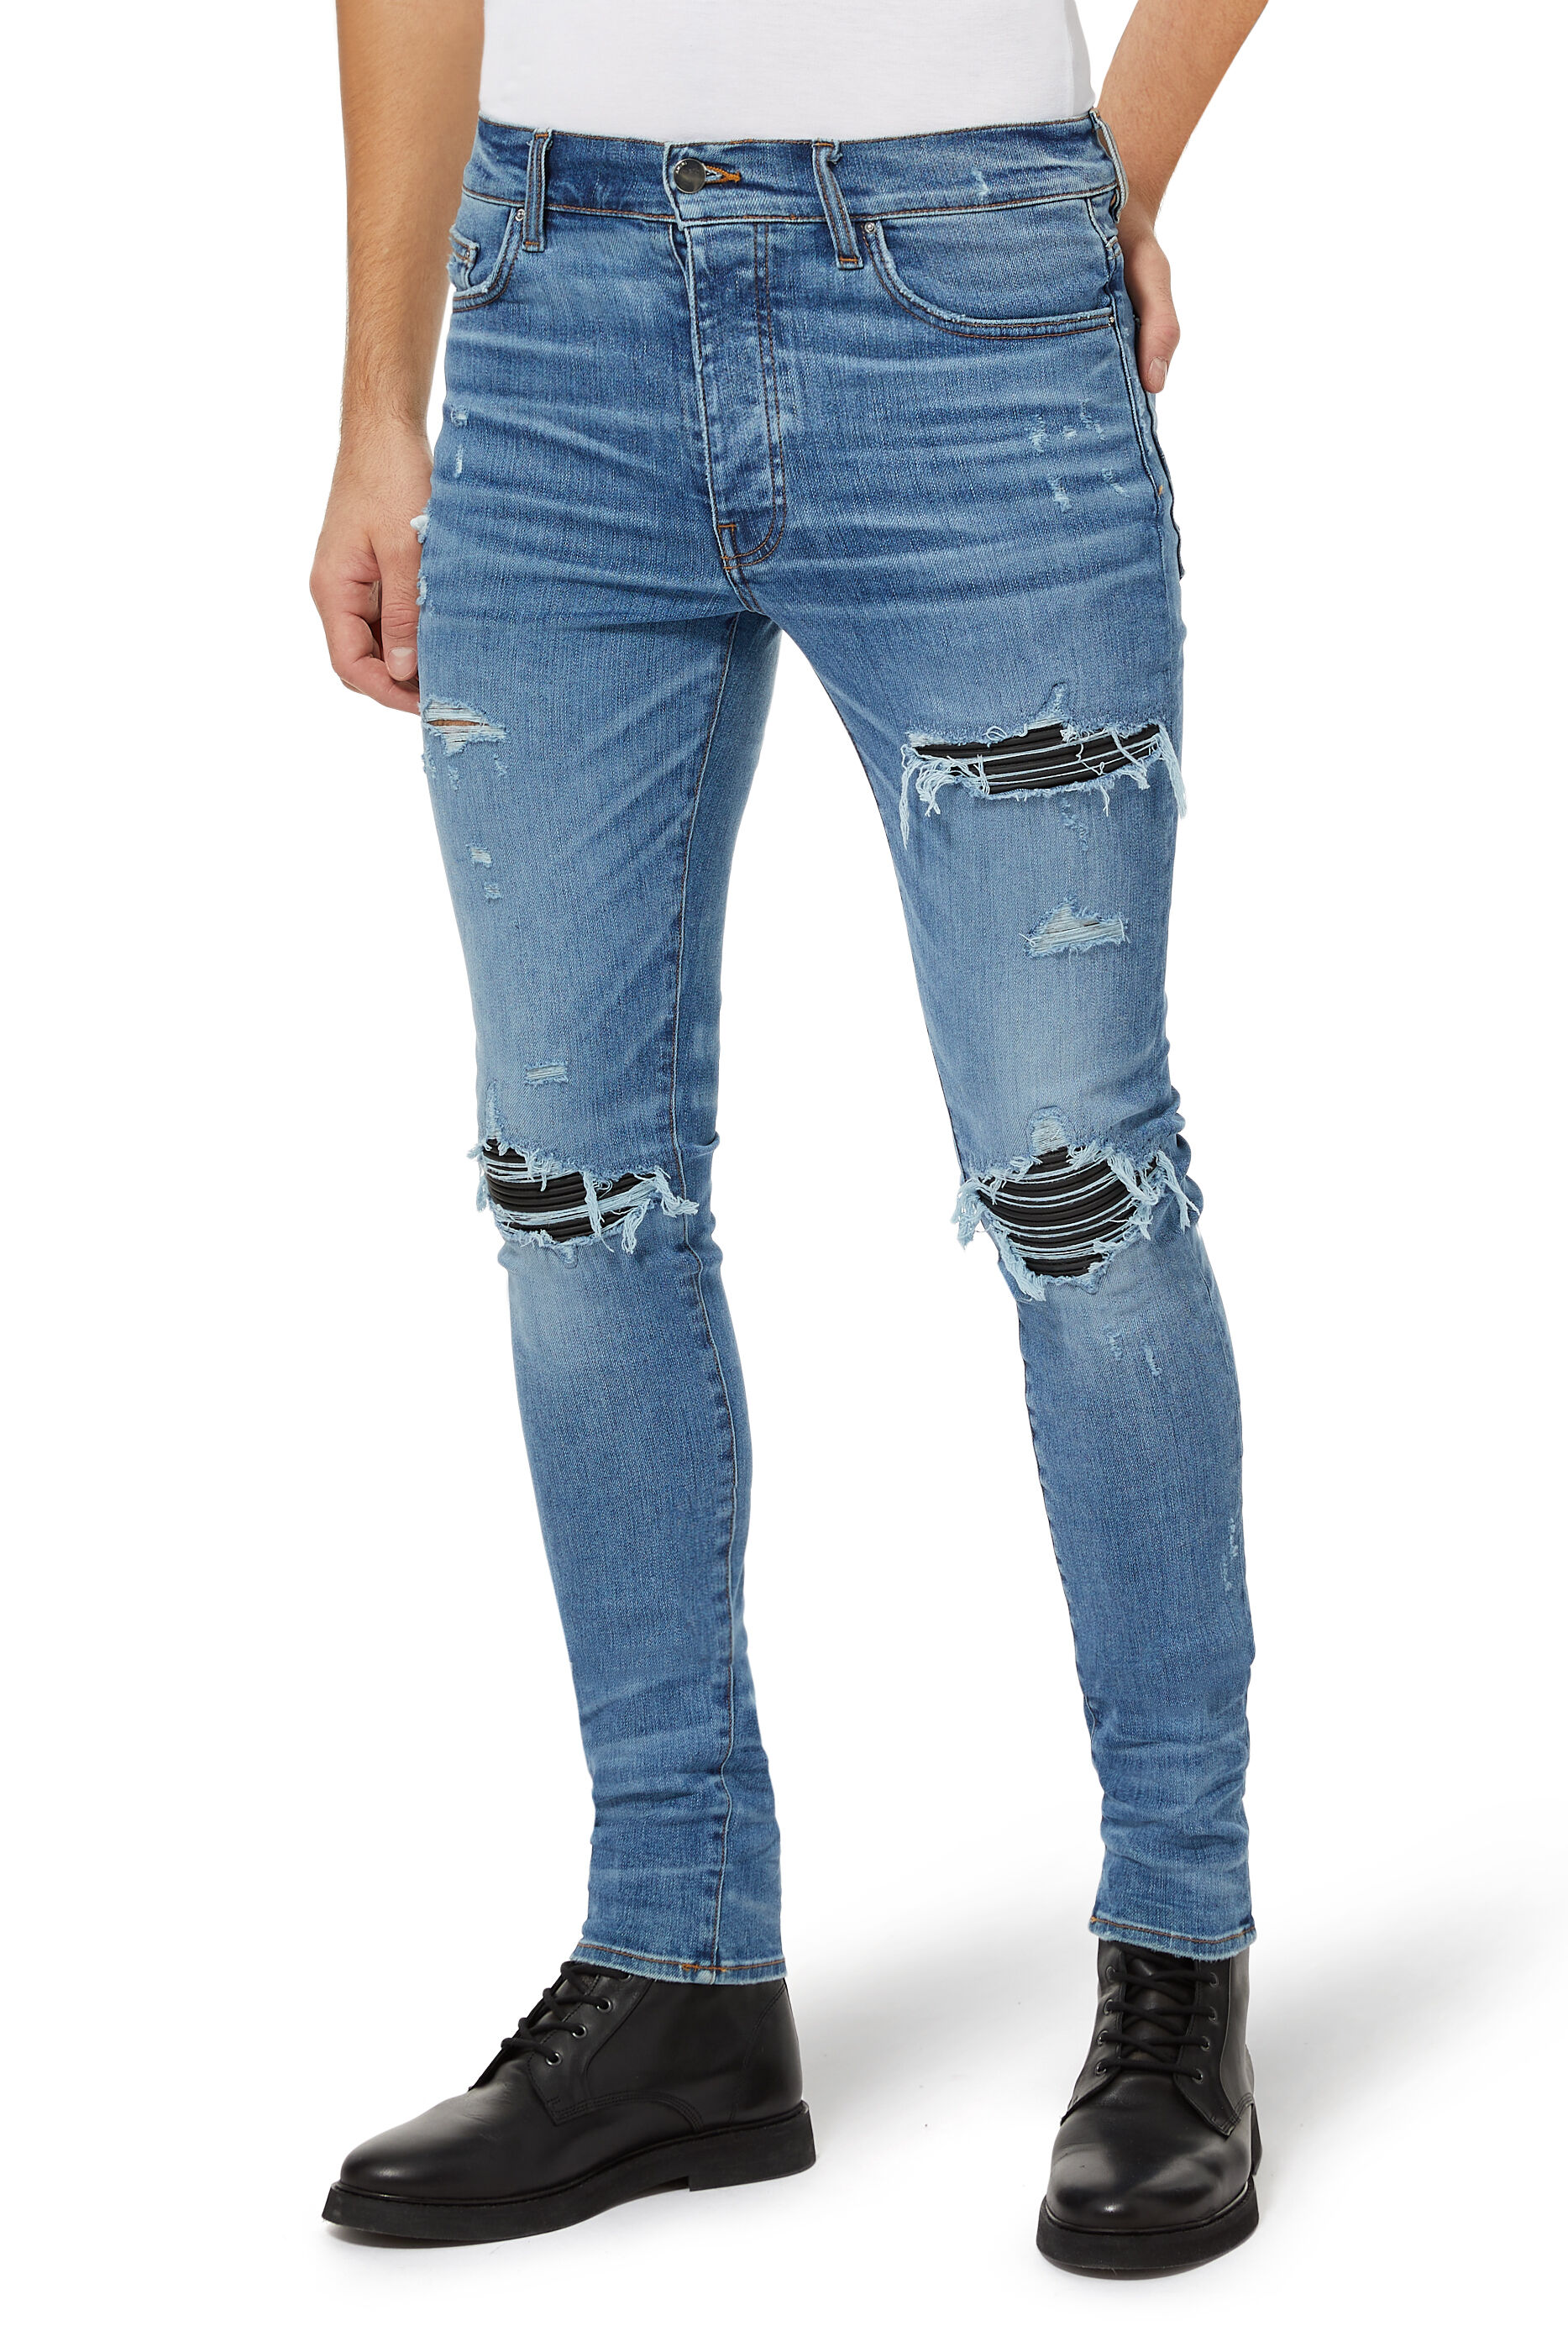 amiri jeans bloomingdales